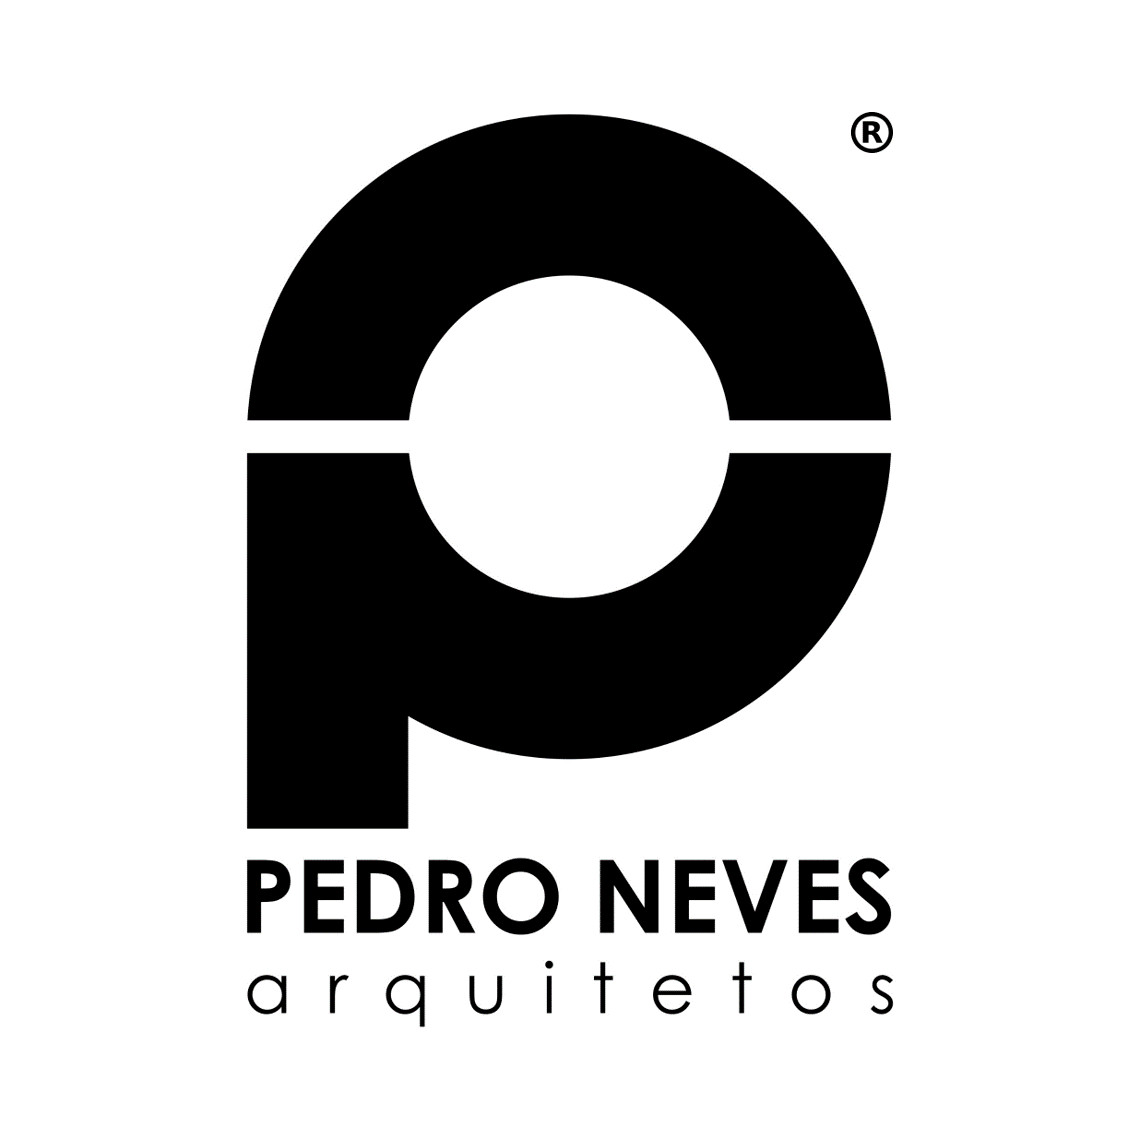 PNA | Pedro Neves Arquitetos